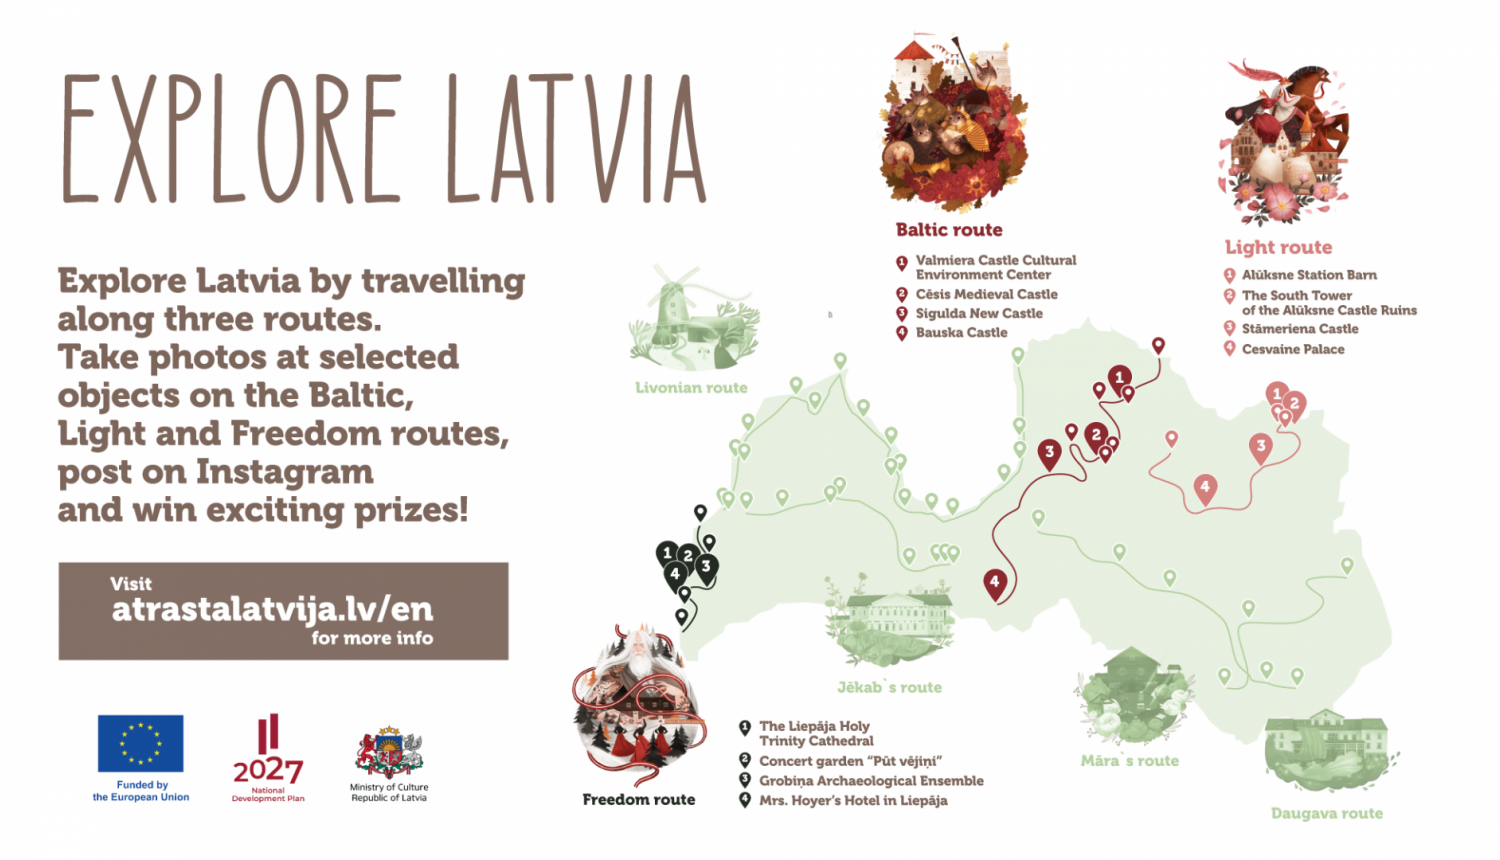 Informational campaign “Explore Latvia” visual publicity material